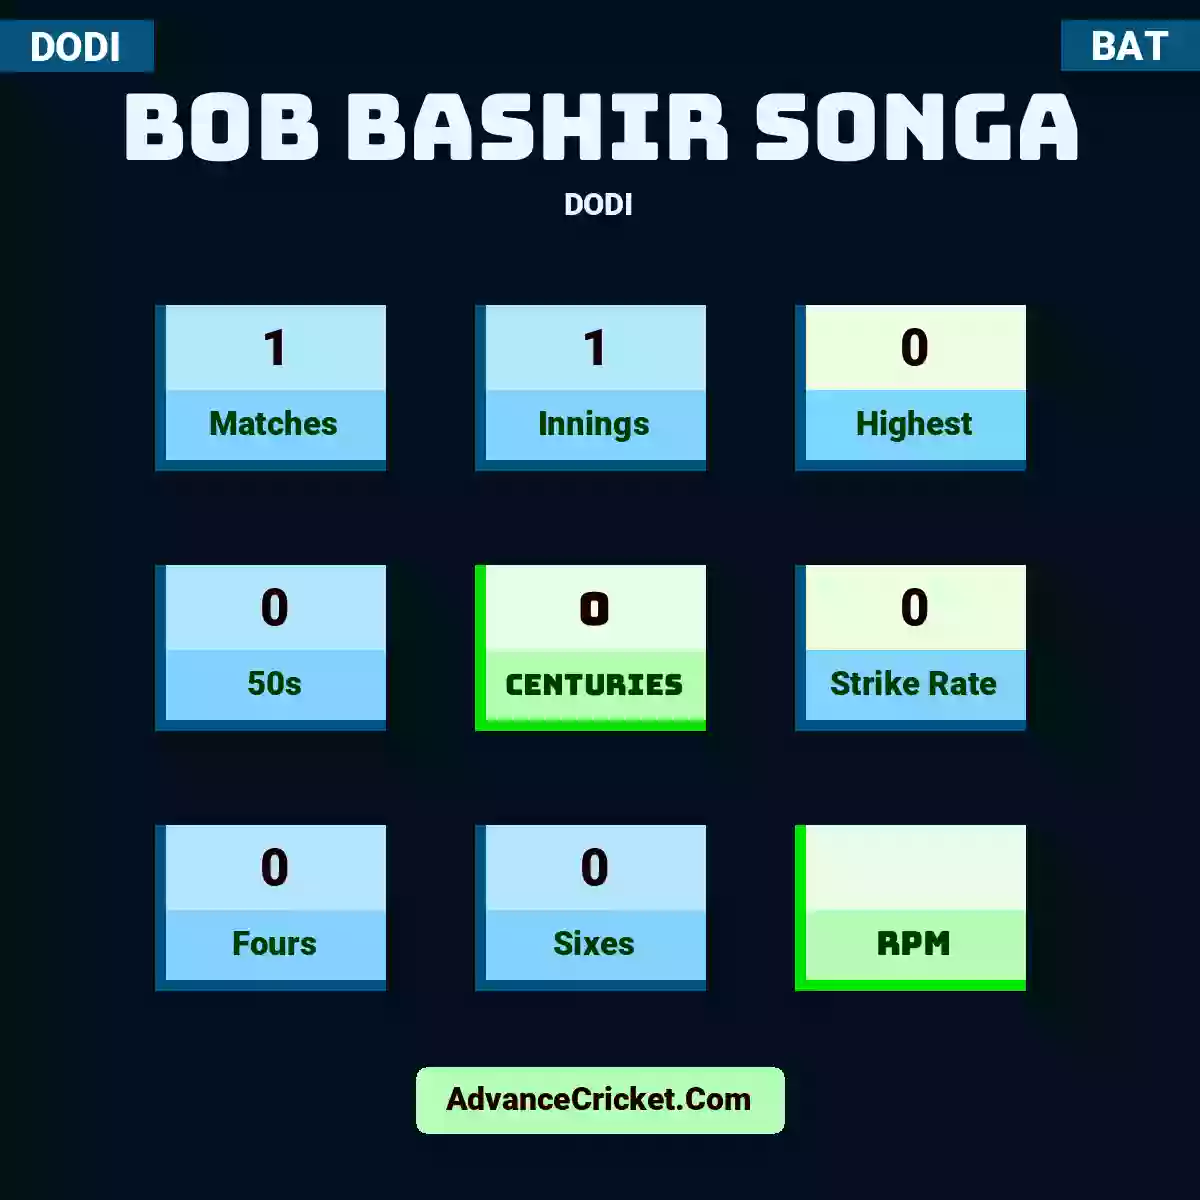 Bob Bashir Songa DODI , Bob Bashir Songa played 1 matches, scored 0 runs as highest, 0 half-centuries, and 0 centuries, with a strike rate of 0. B.Bashir.Songa hit 0 fours and 0 sixes.